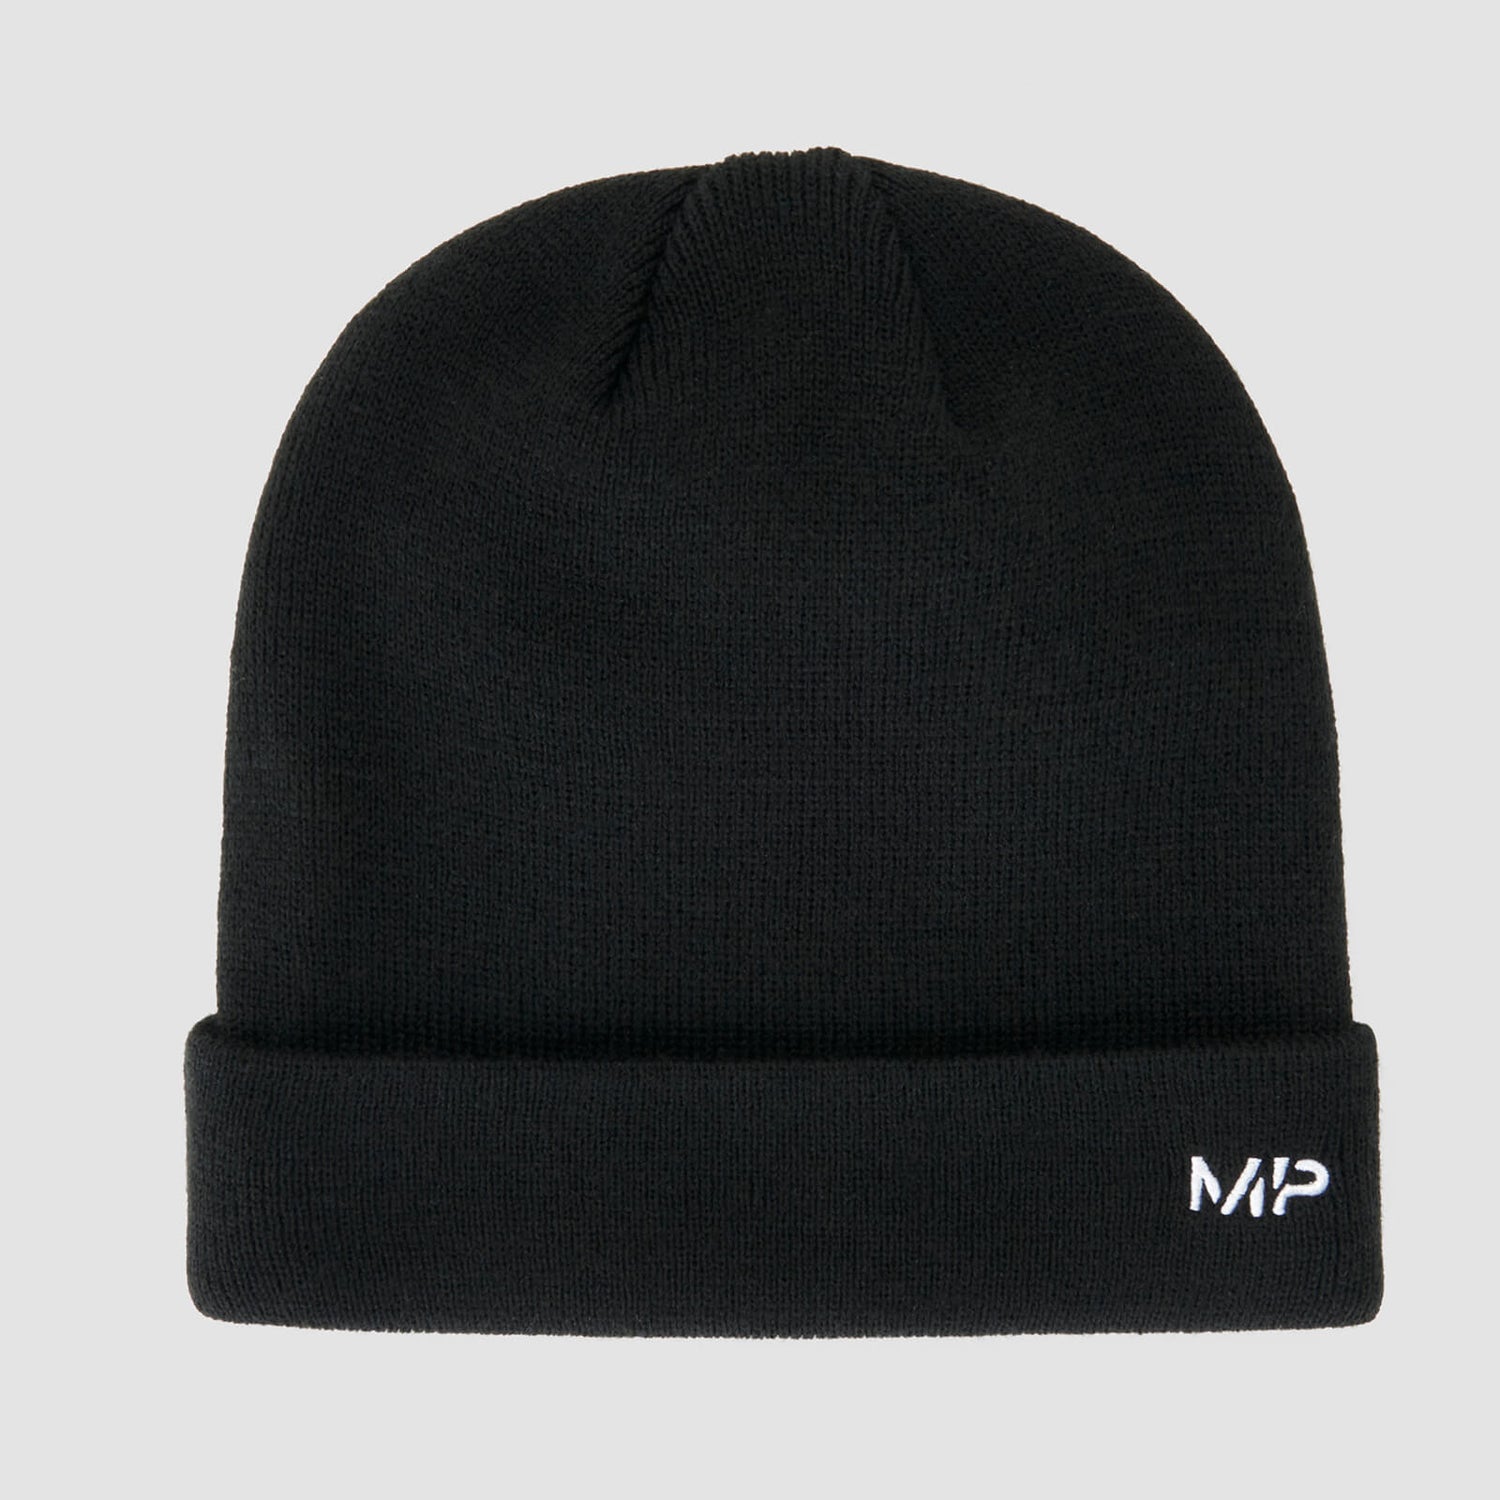 MP Beanie Hat - Μαύρο/Άσπρο